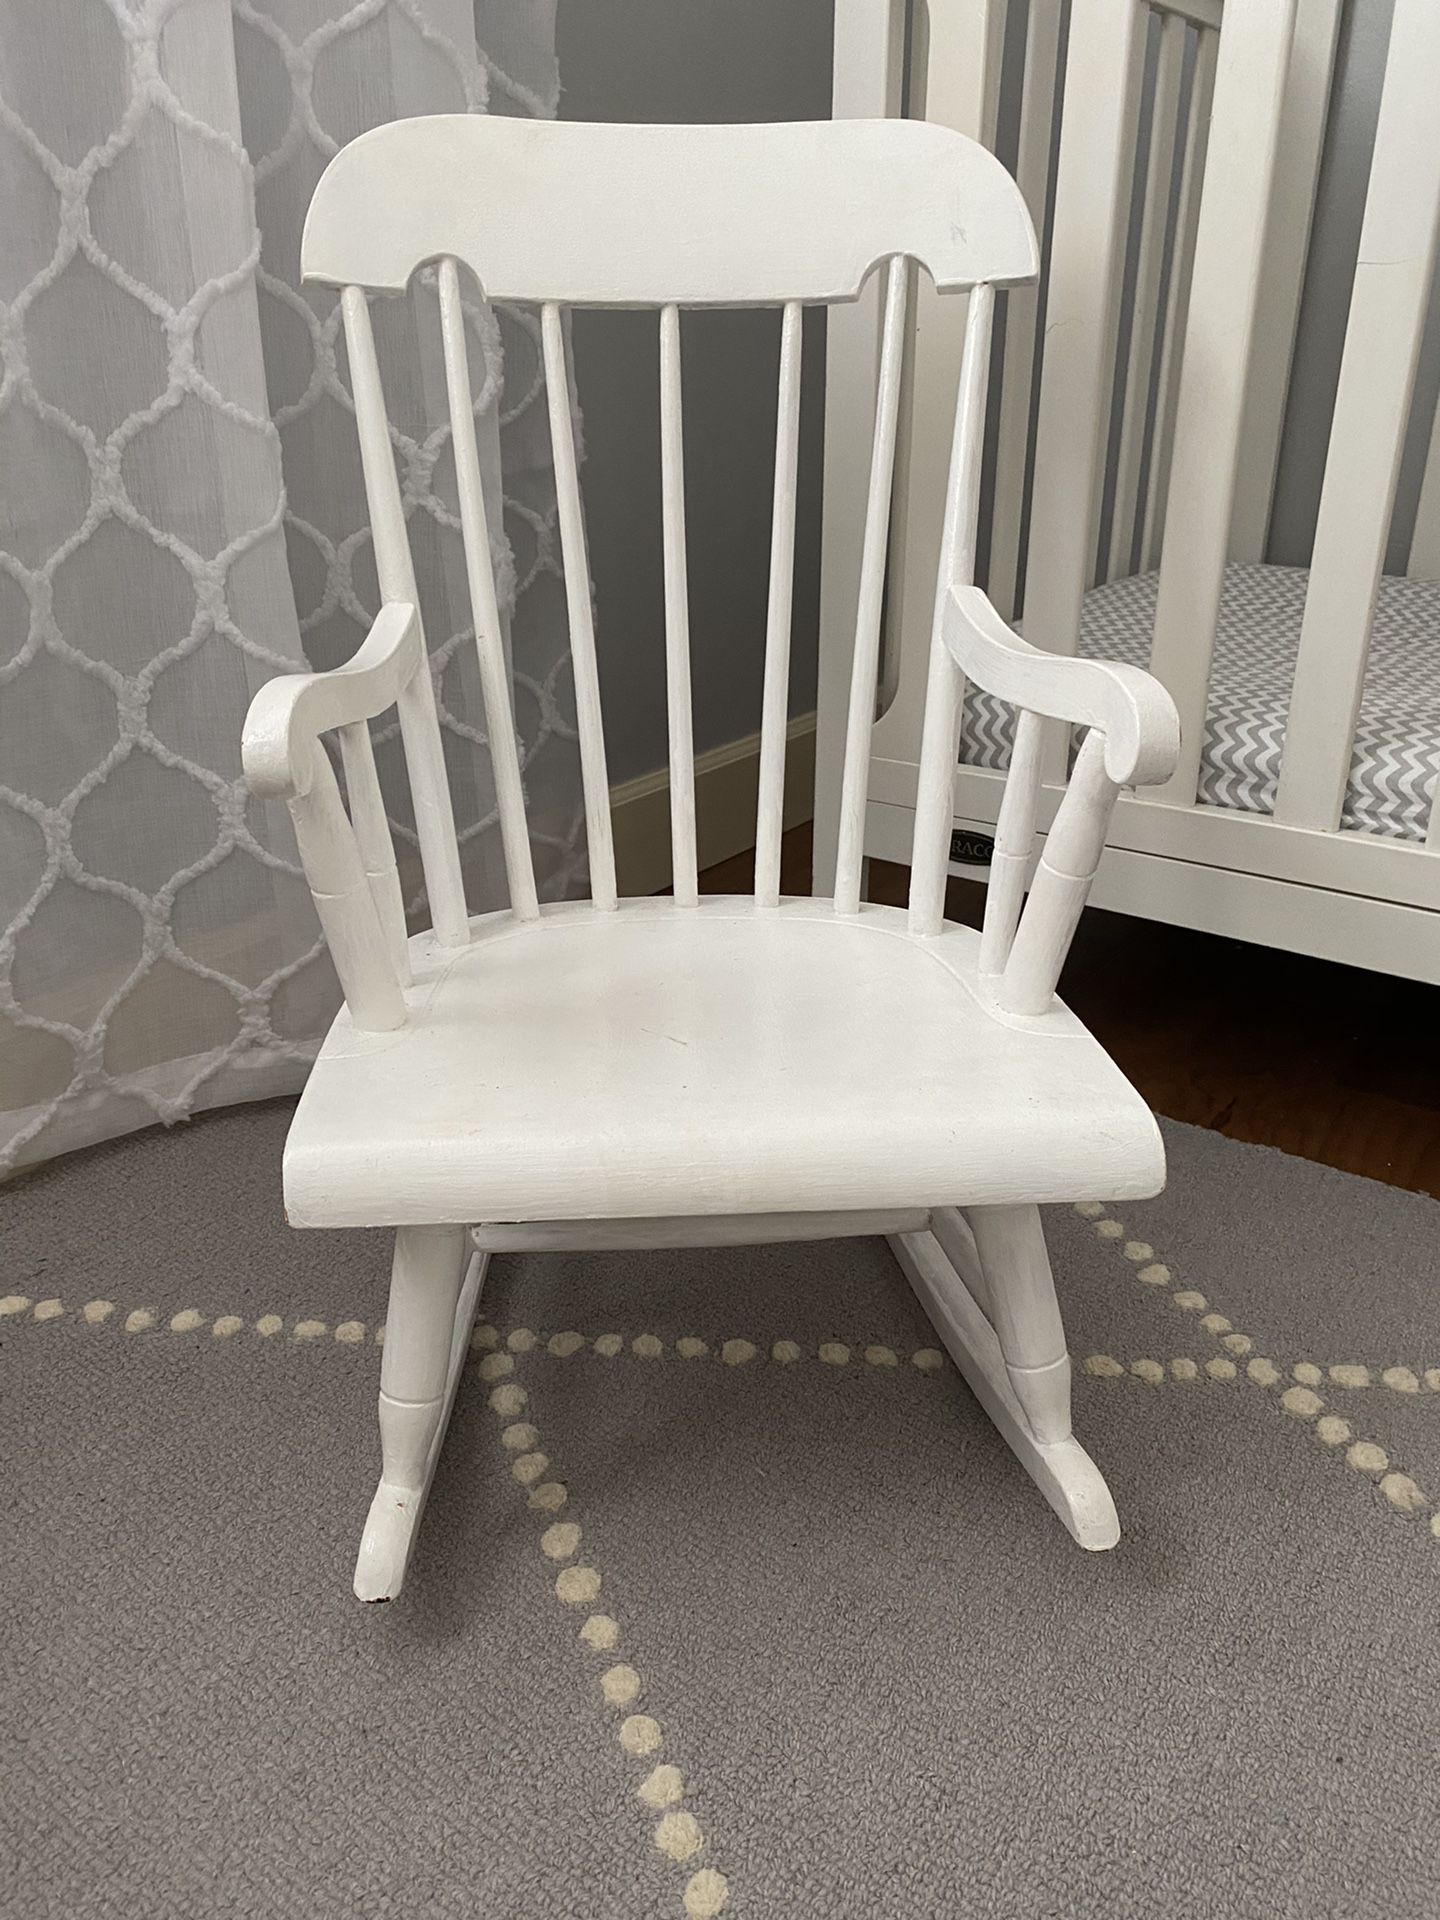 Mini rocking chair for nursery